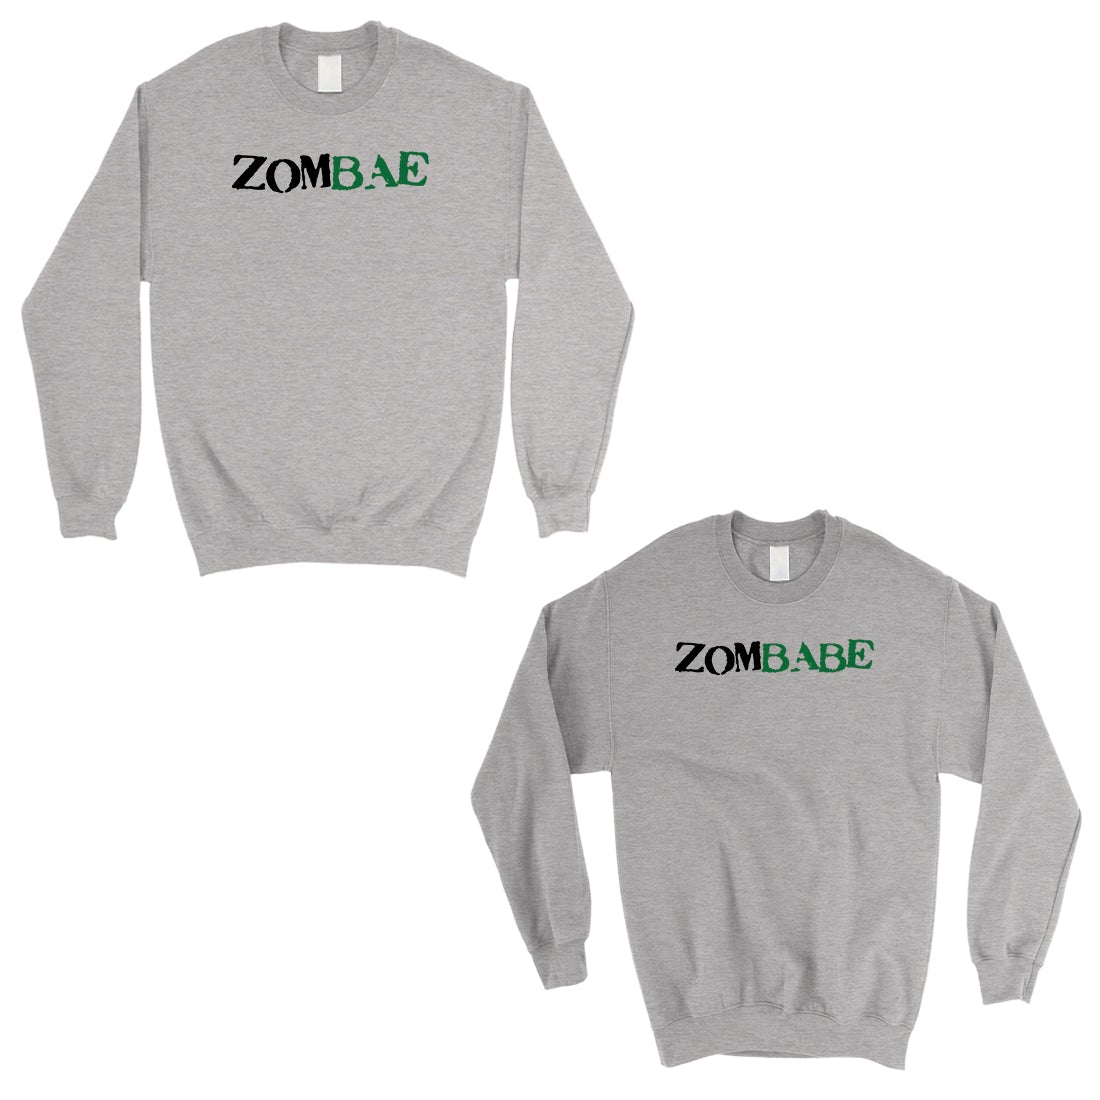 Zombae And Zombabe Matching Sweatshirt Pullover Gray